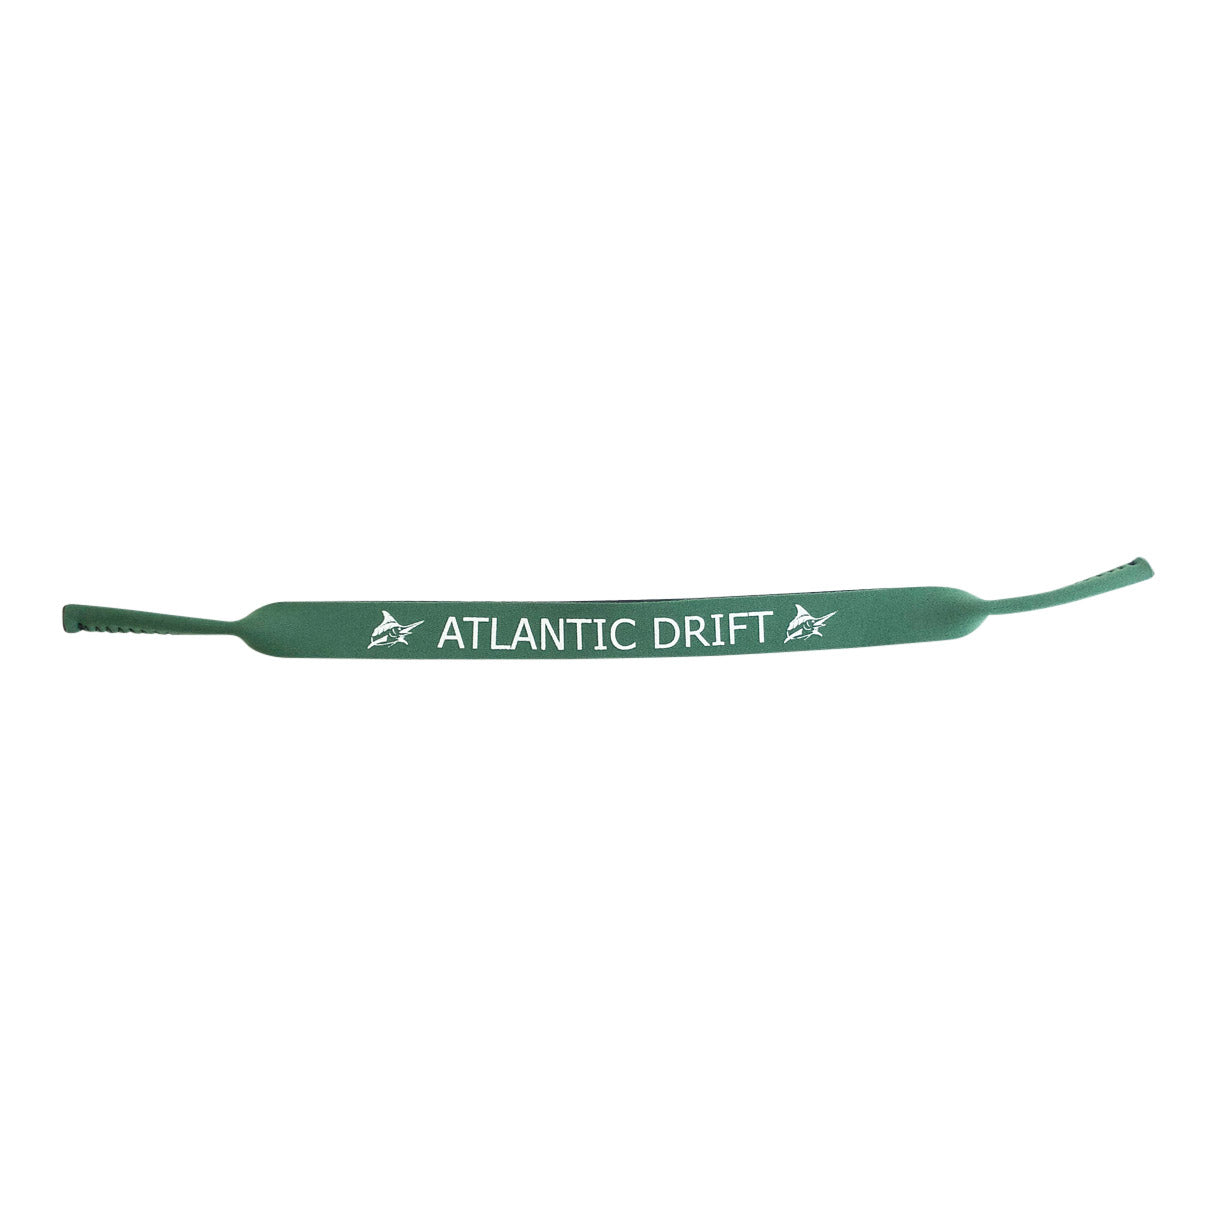 Sunglass Straps - Atlantic Drift